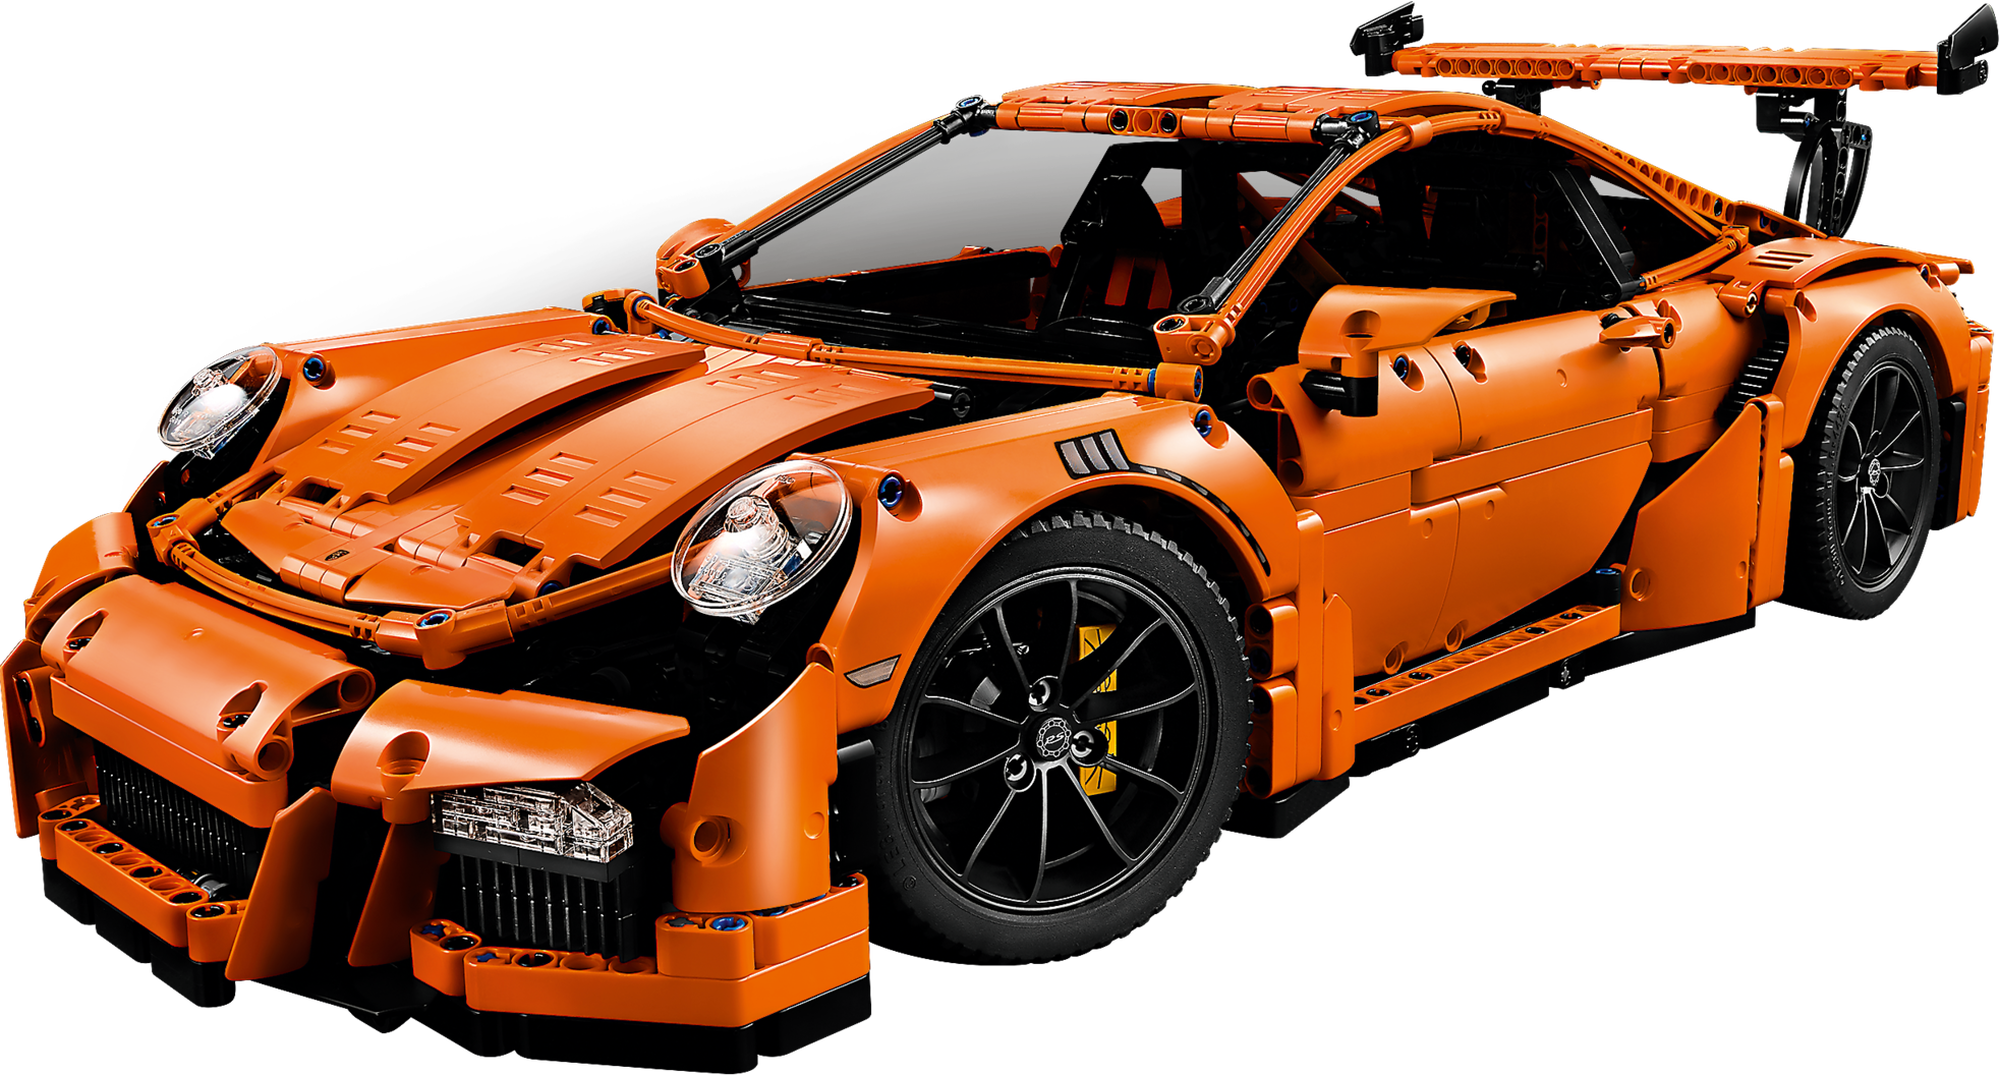 LEGO Technic Porsche 911 GT3 RS - 42056